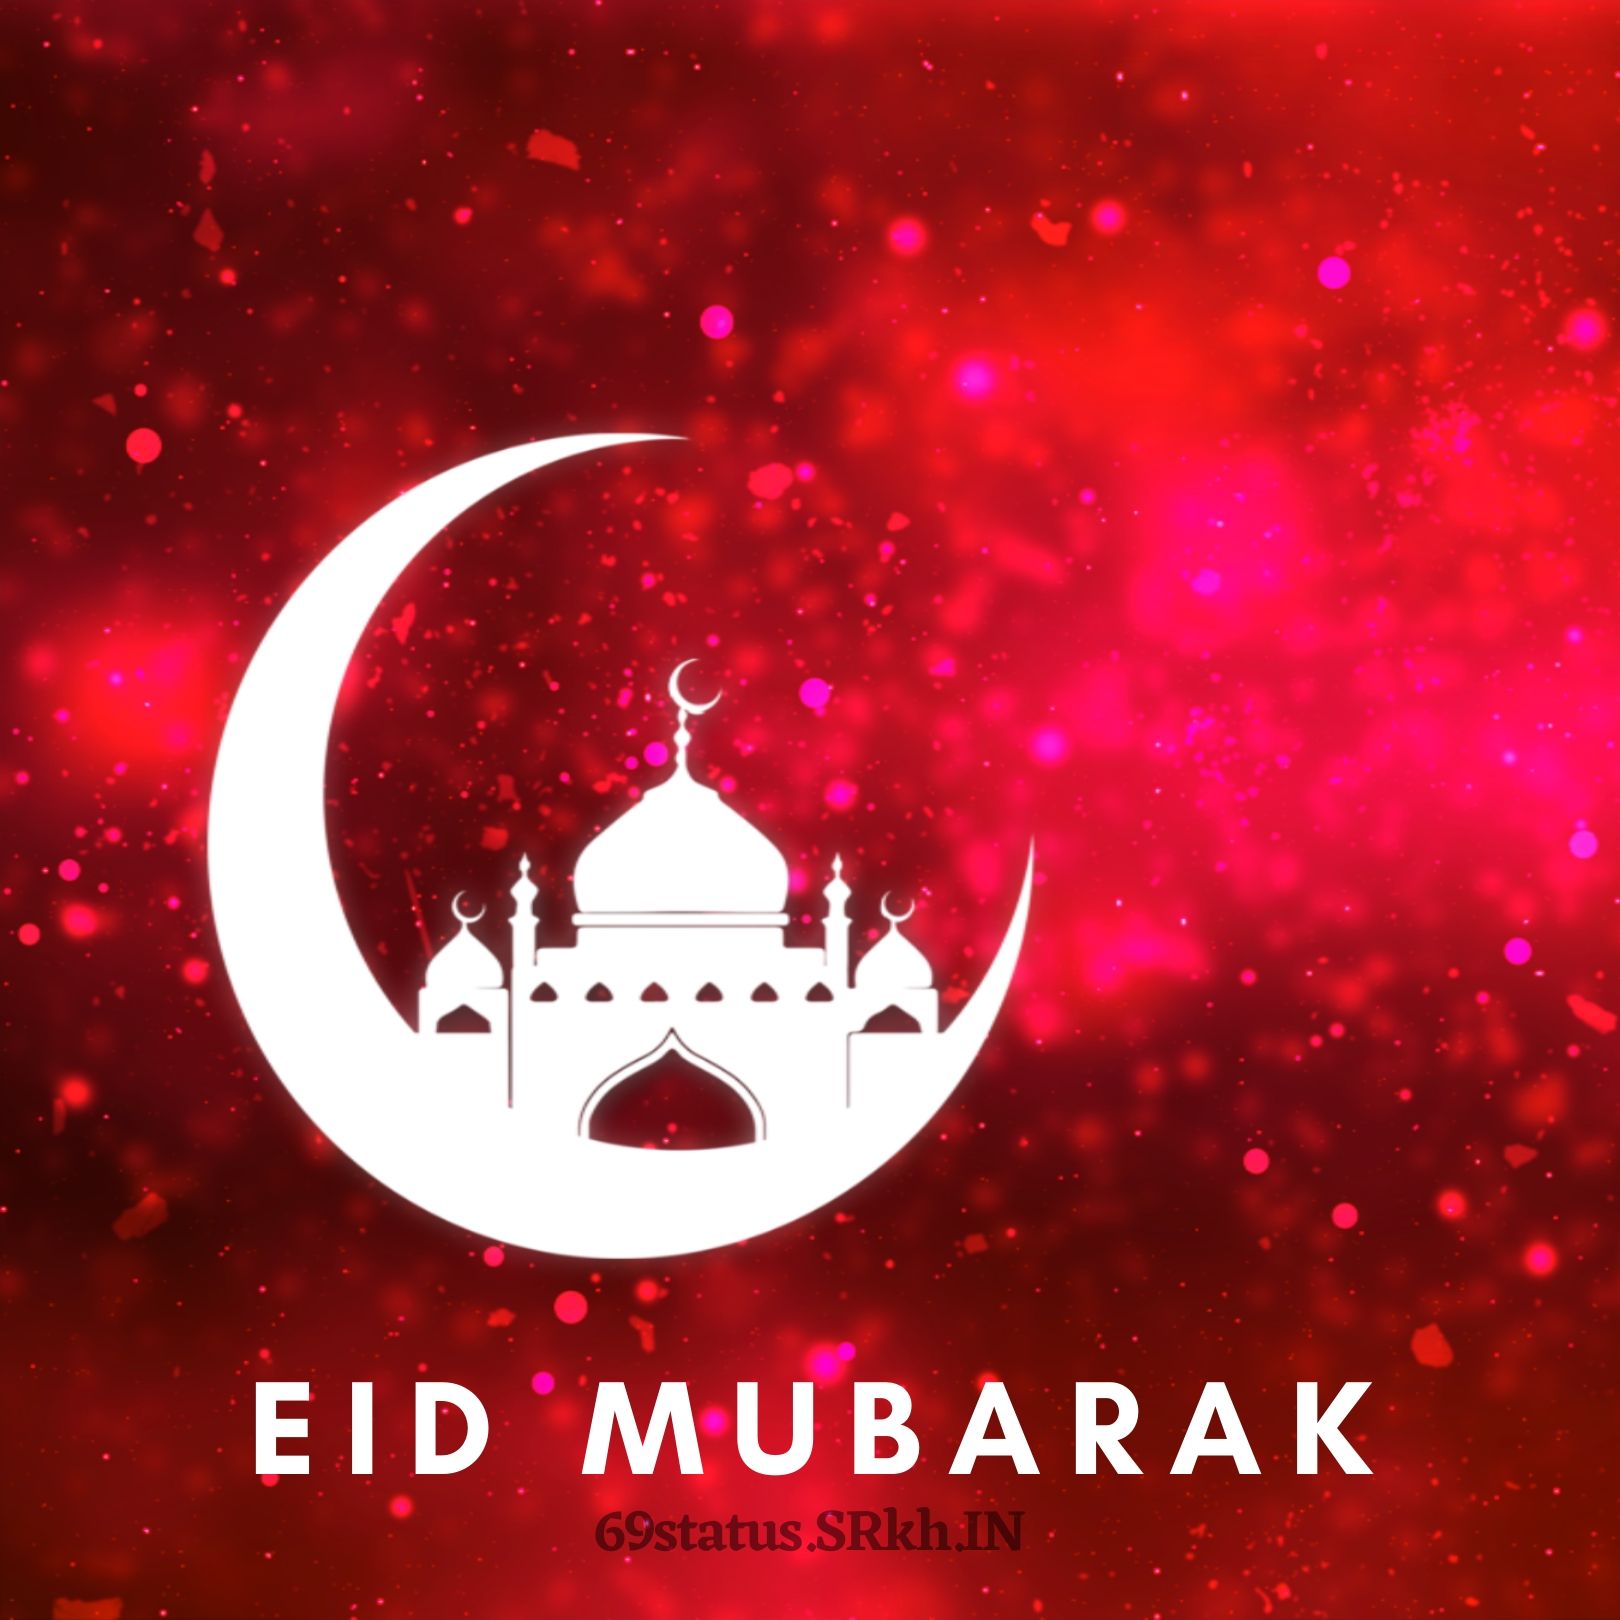 Beautiful Eid Mubarak Image